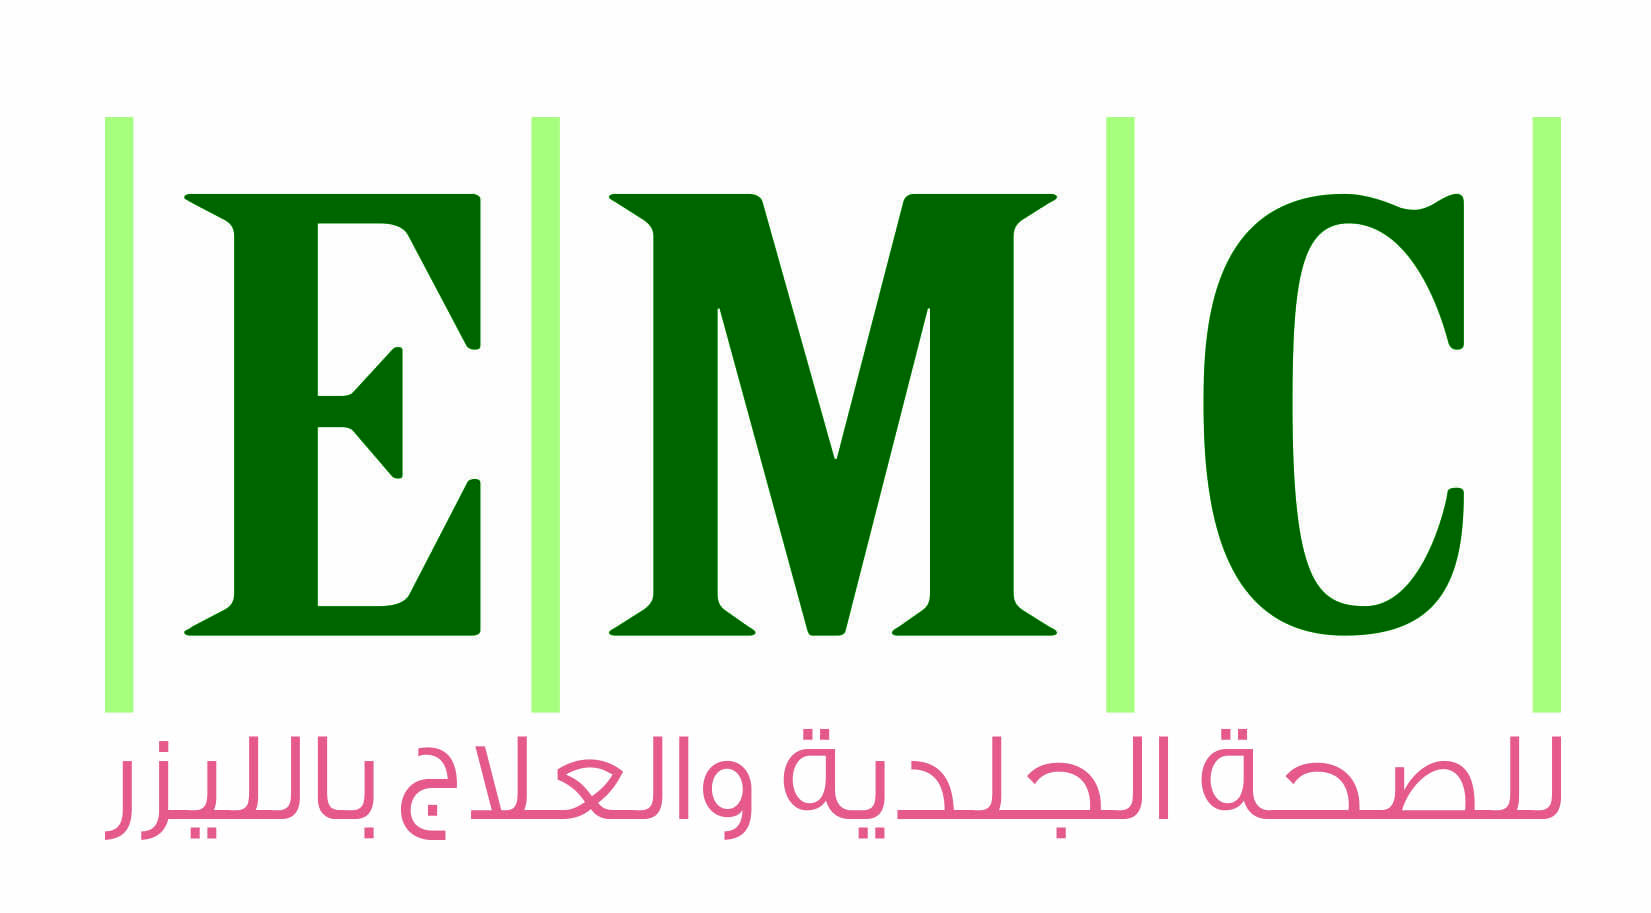 EMC Hospital Logo - Emirates Medical Center. Leading Skin and Laser Center